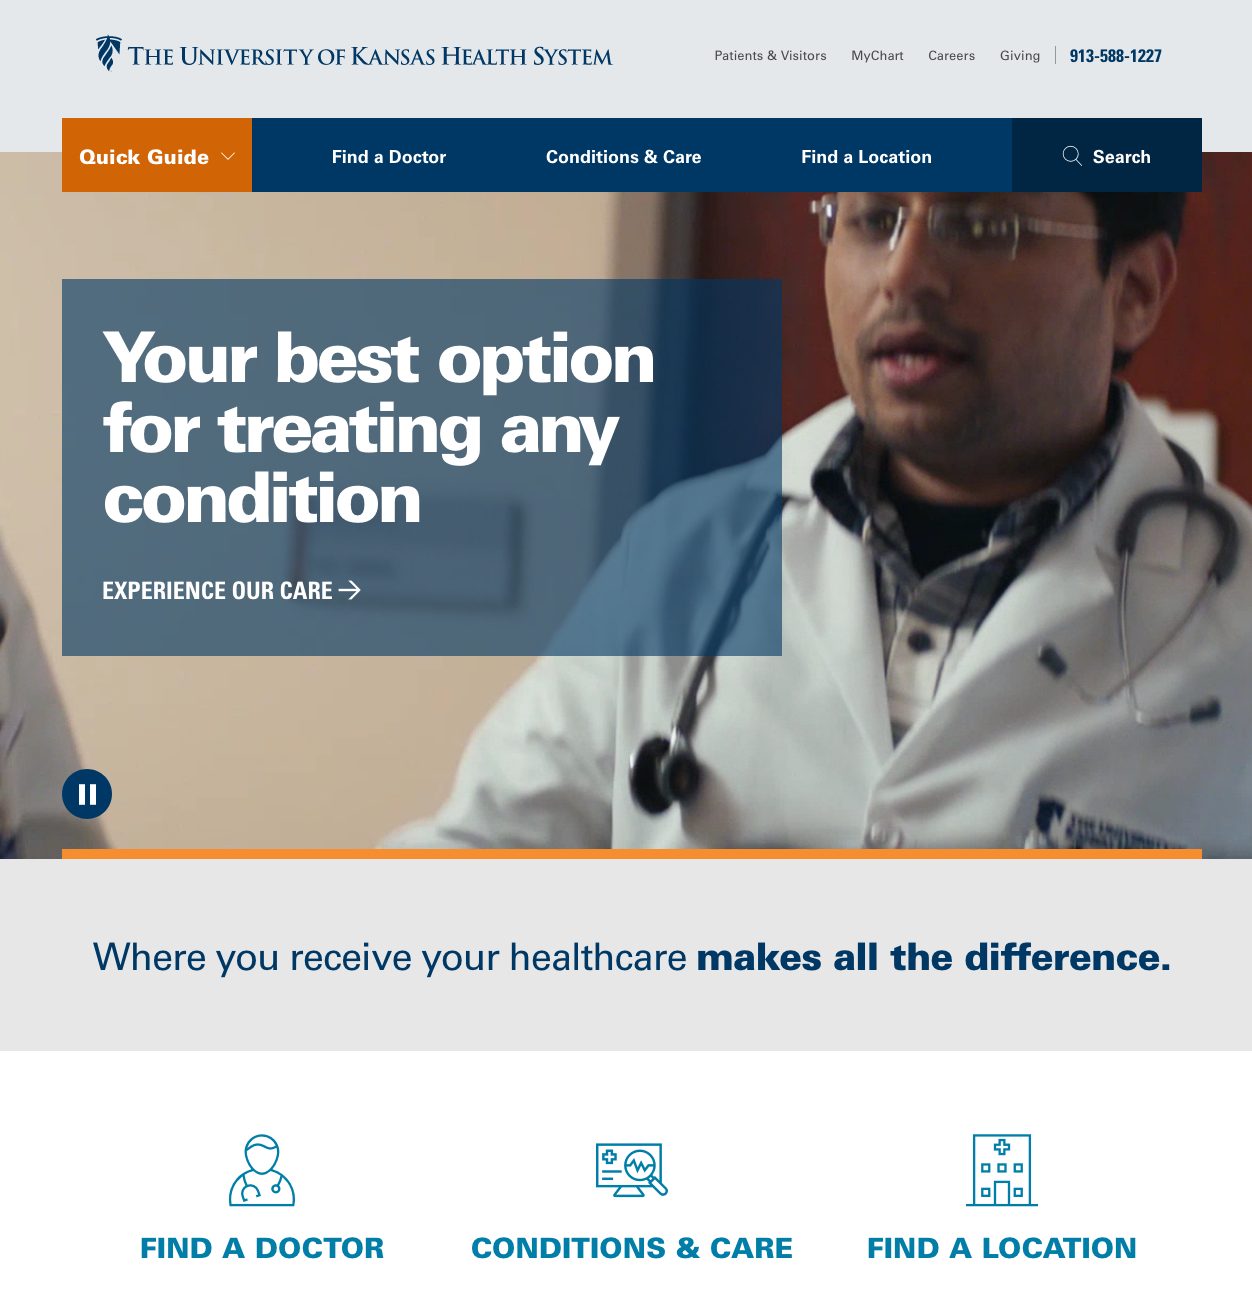 The University of Kansas Health System Website image